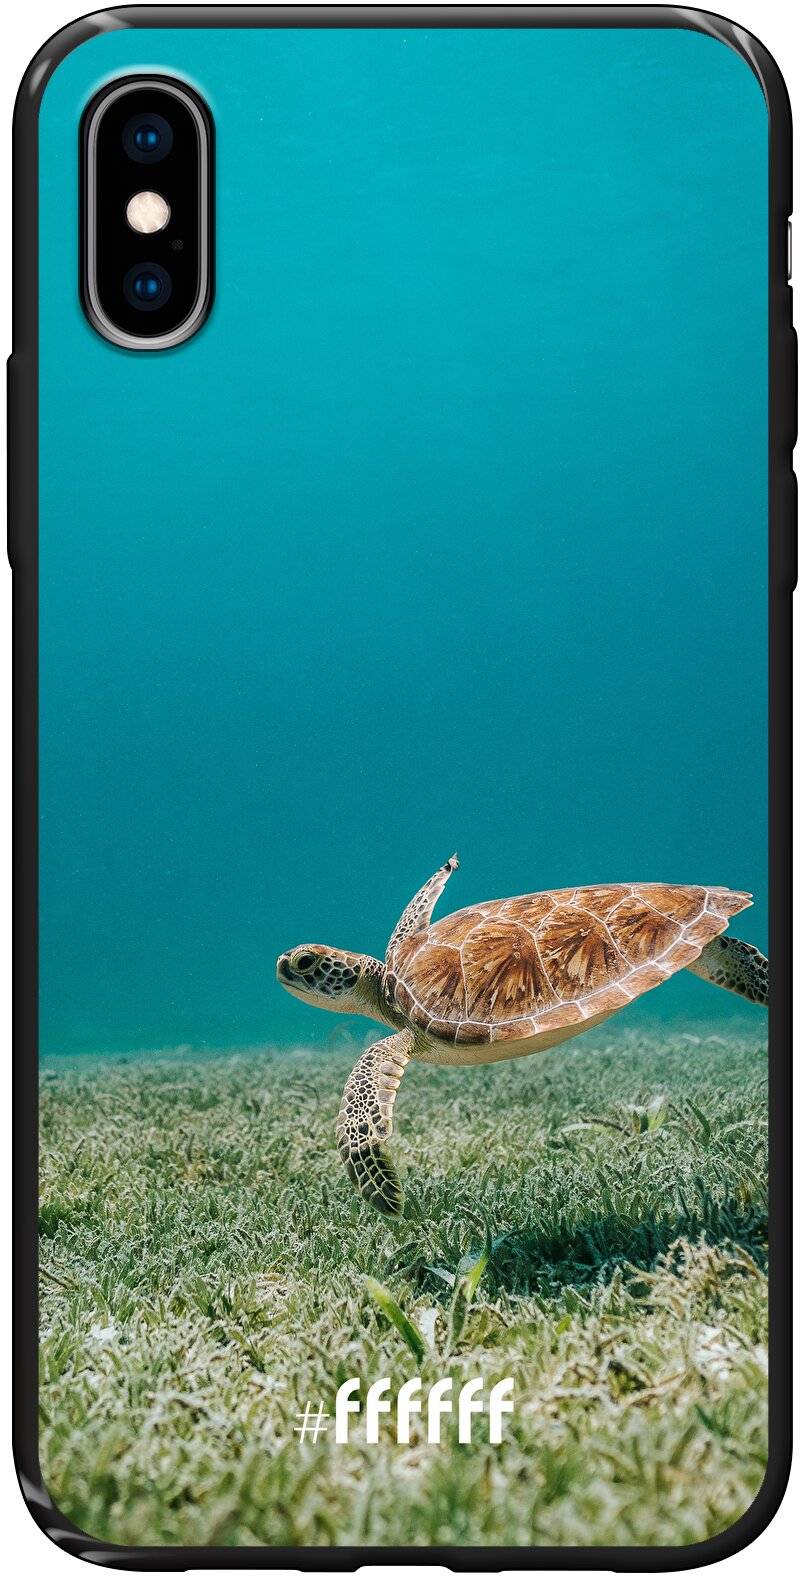 Turtle iPhone X